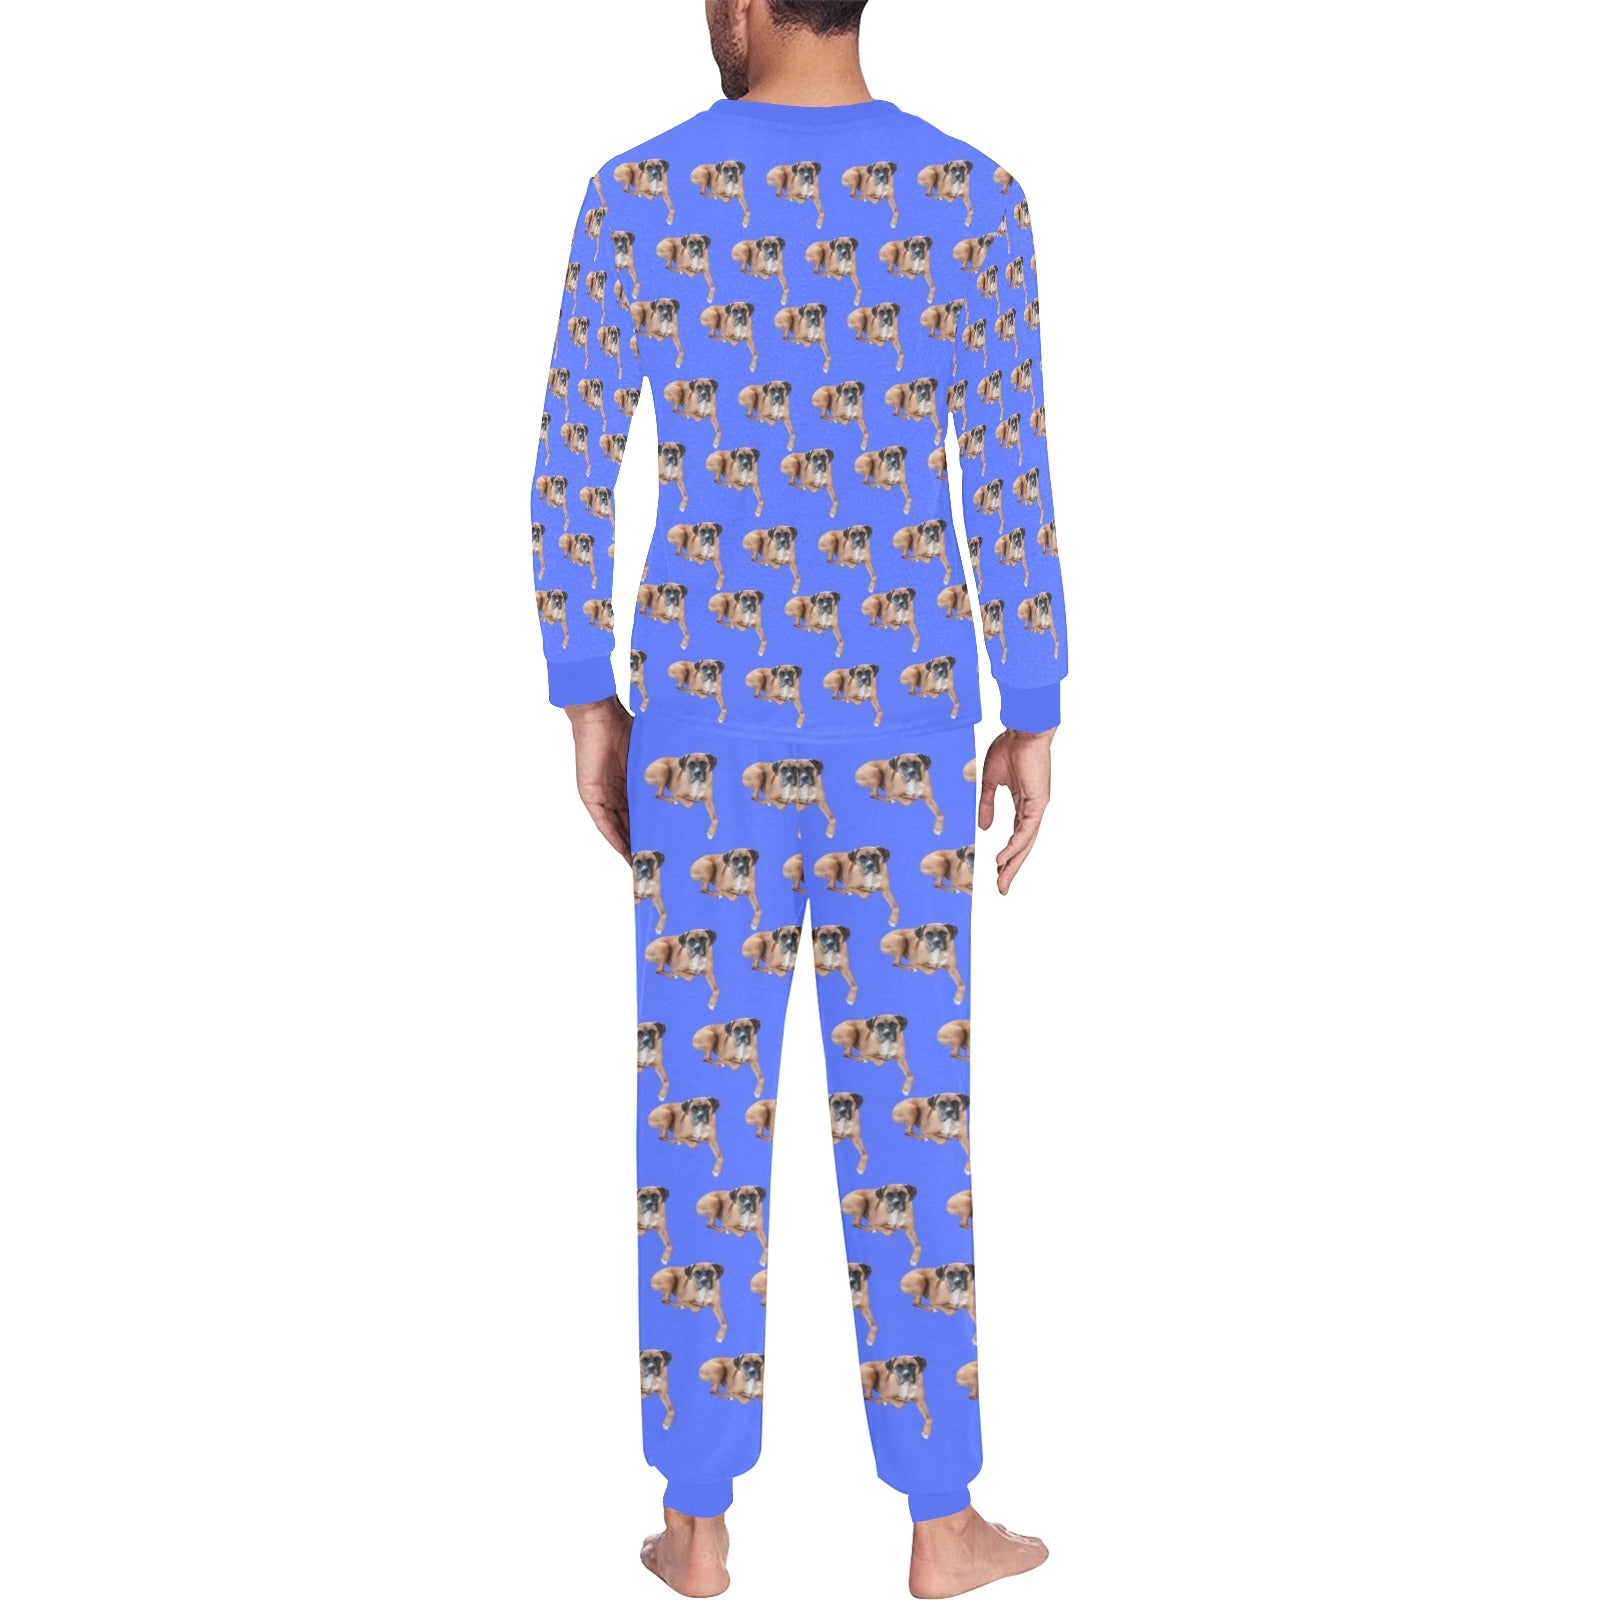 Candy's Men's Pajama Set